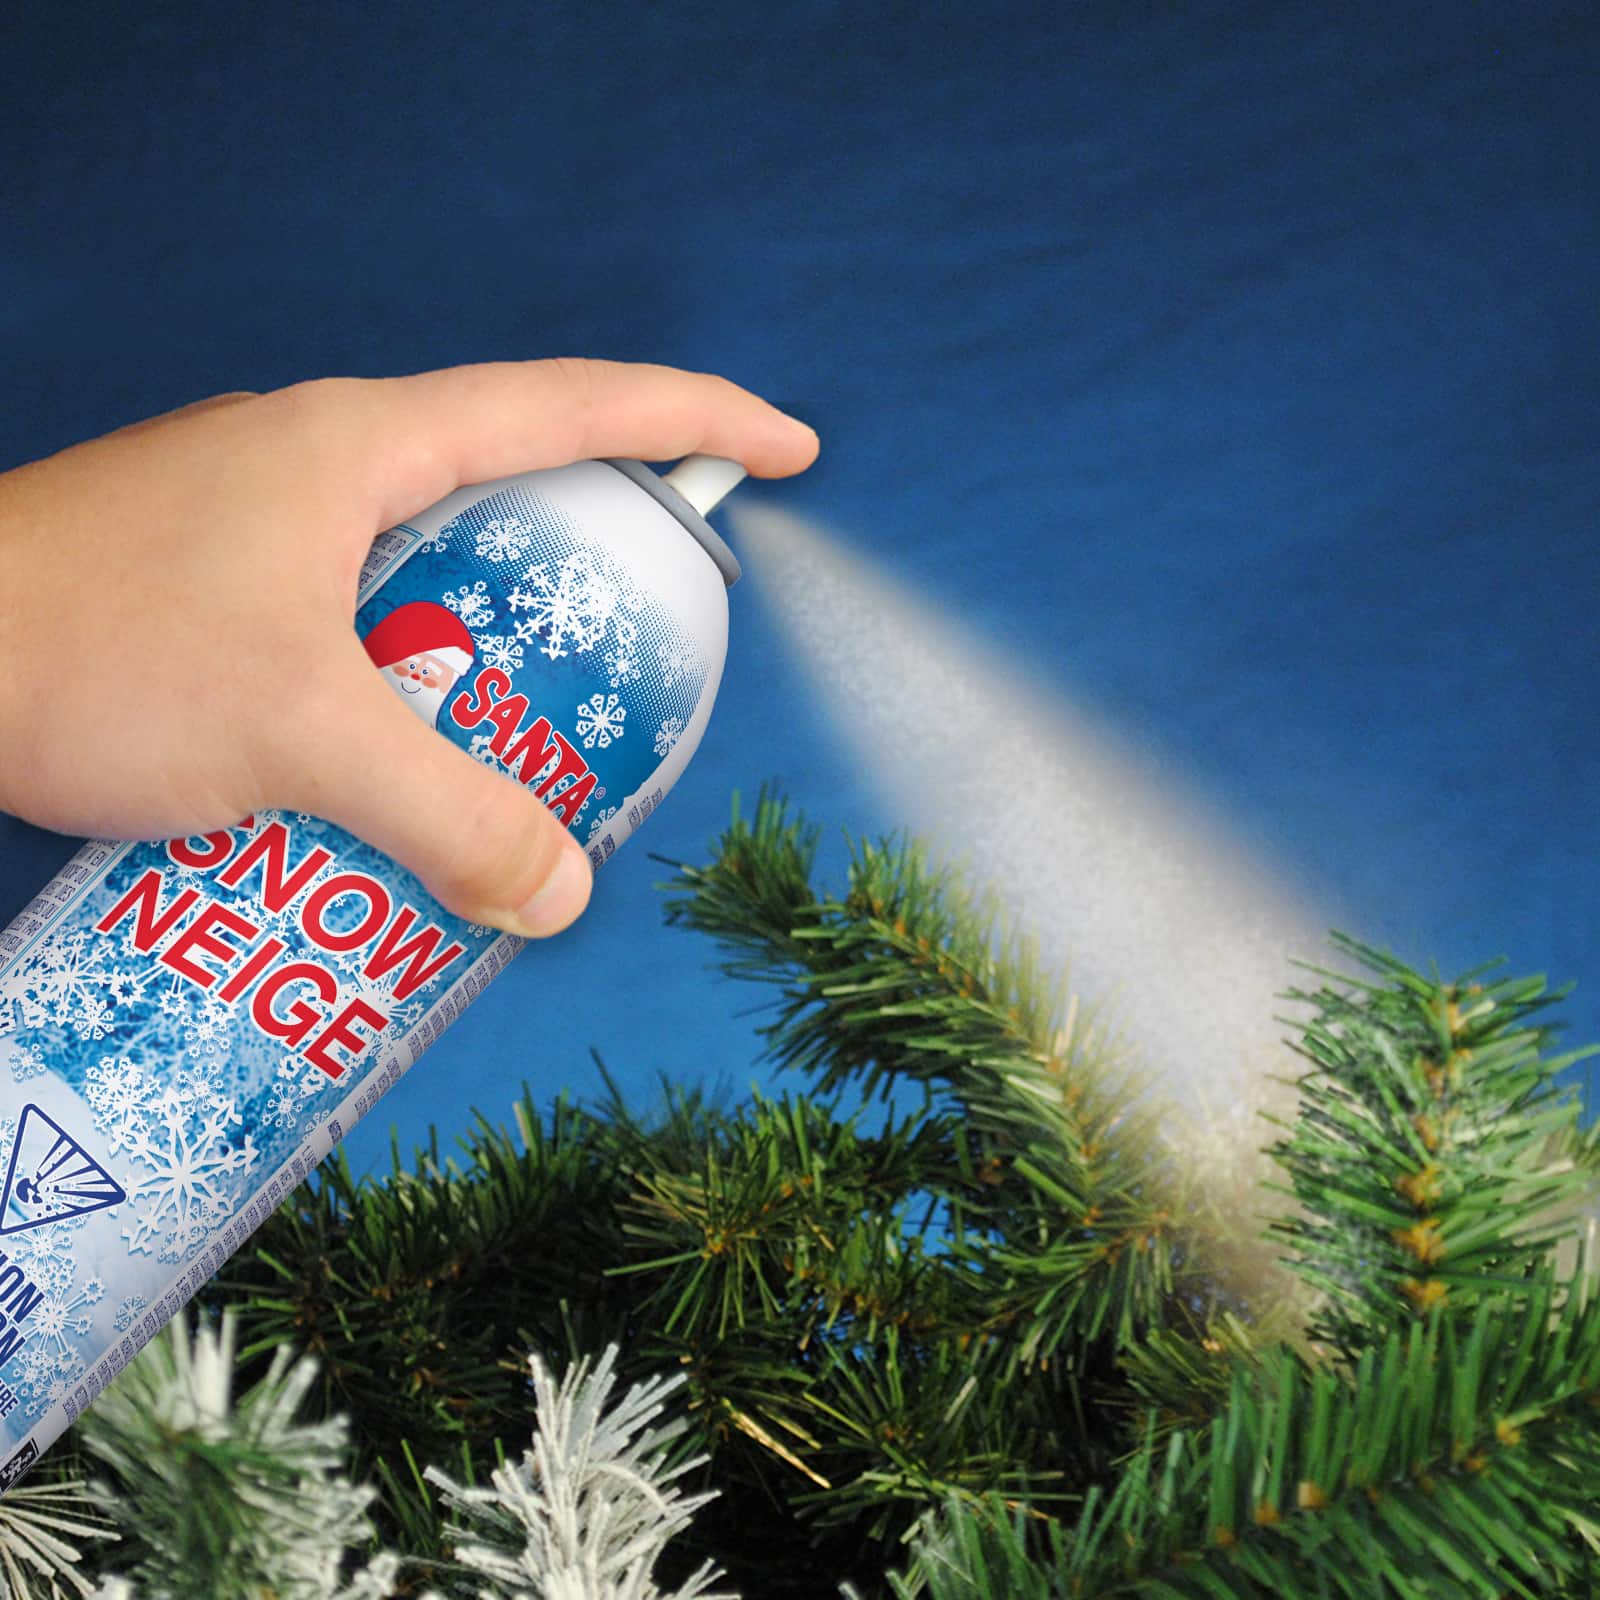 Snow Spray Large Can (180g) – Christmas World